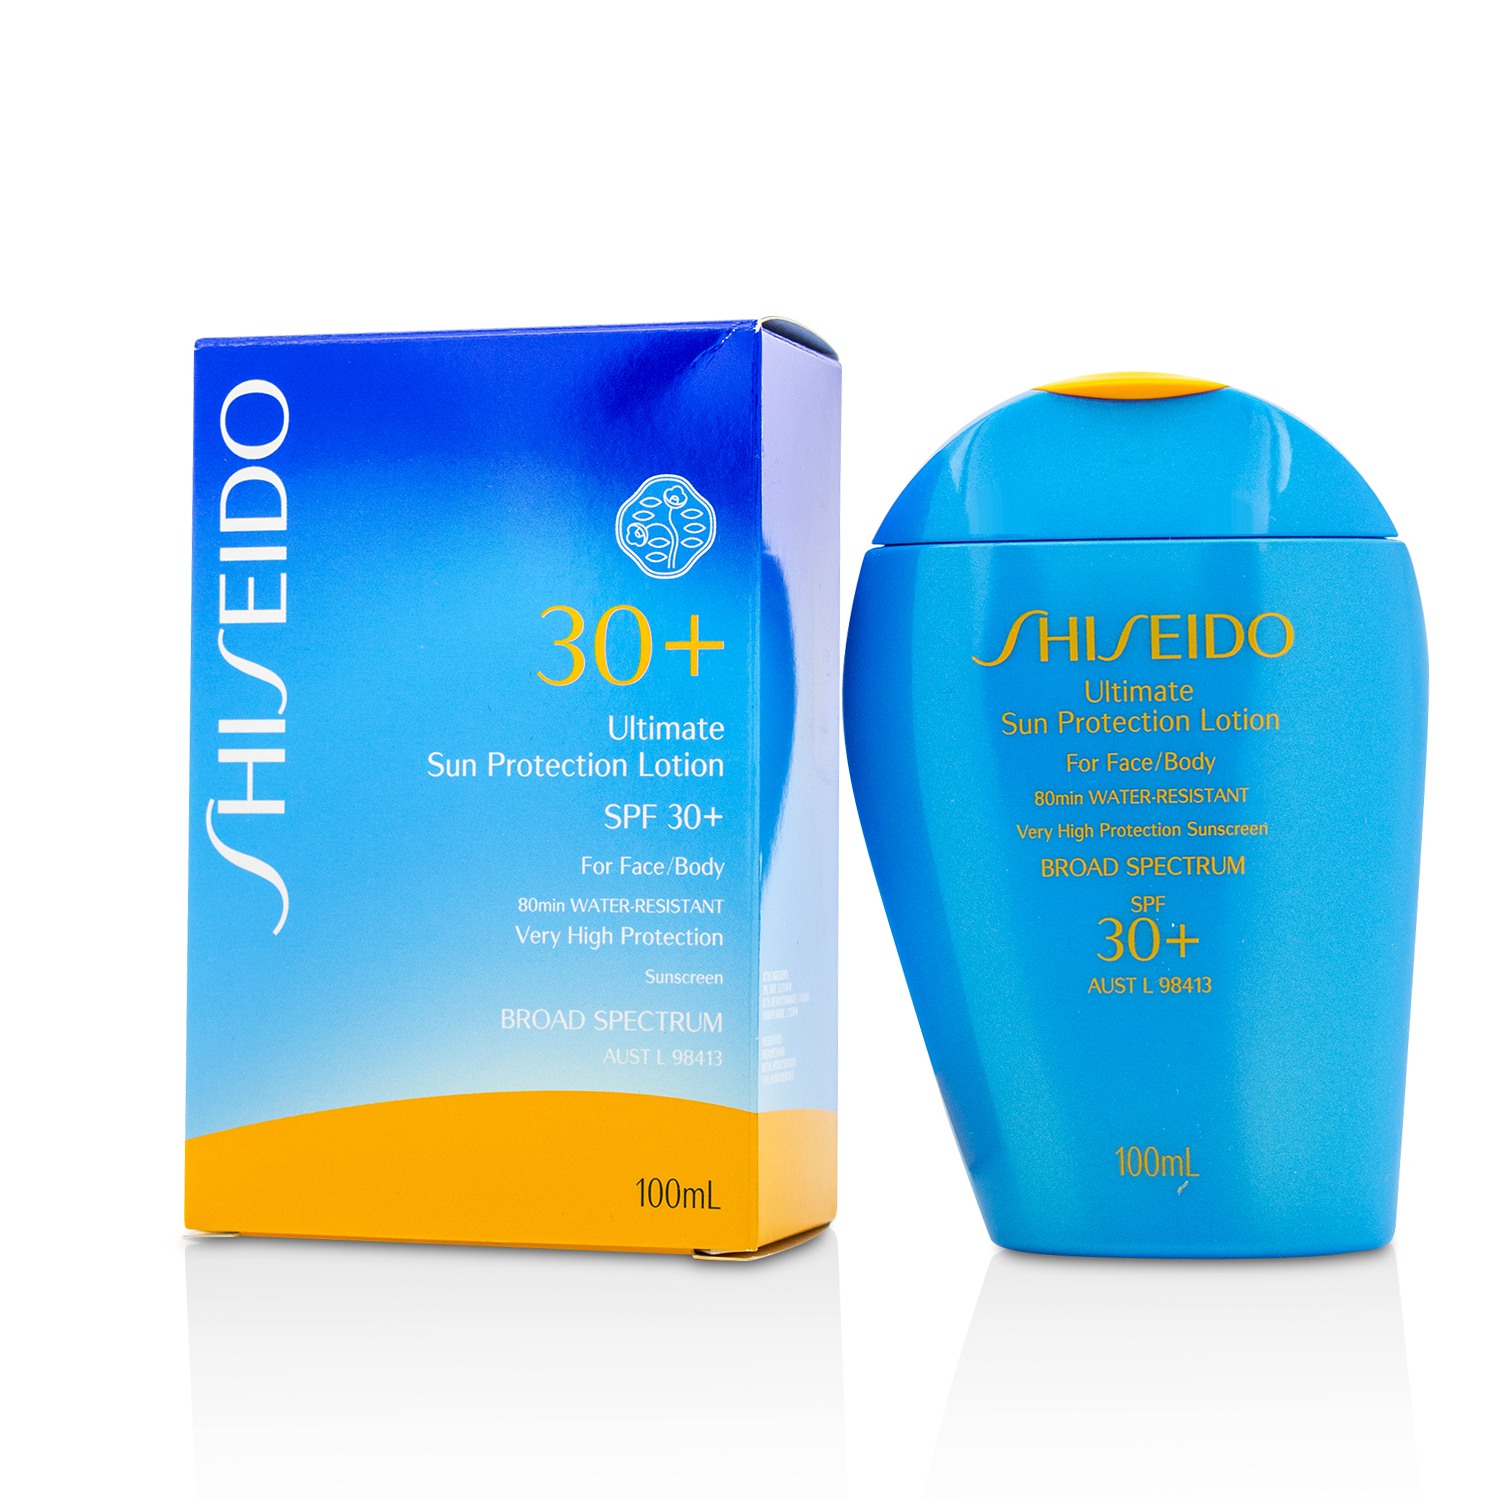 Ultimate Sun Protection Face & Body Lotion SPF 30+ Shiseido Image